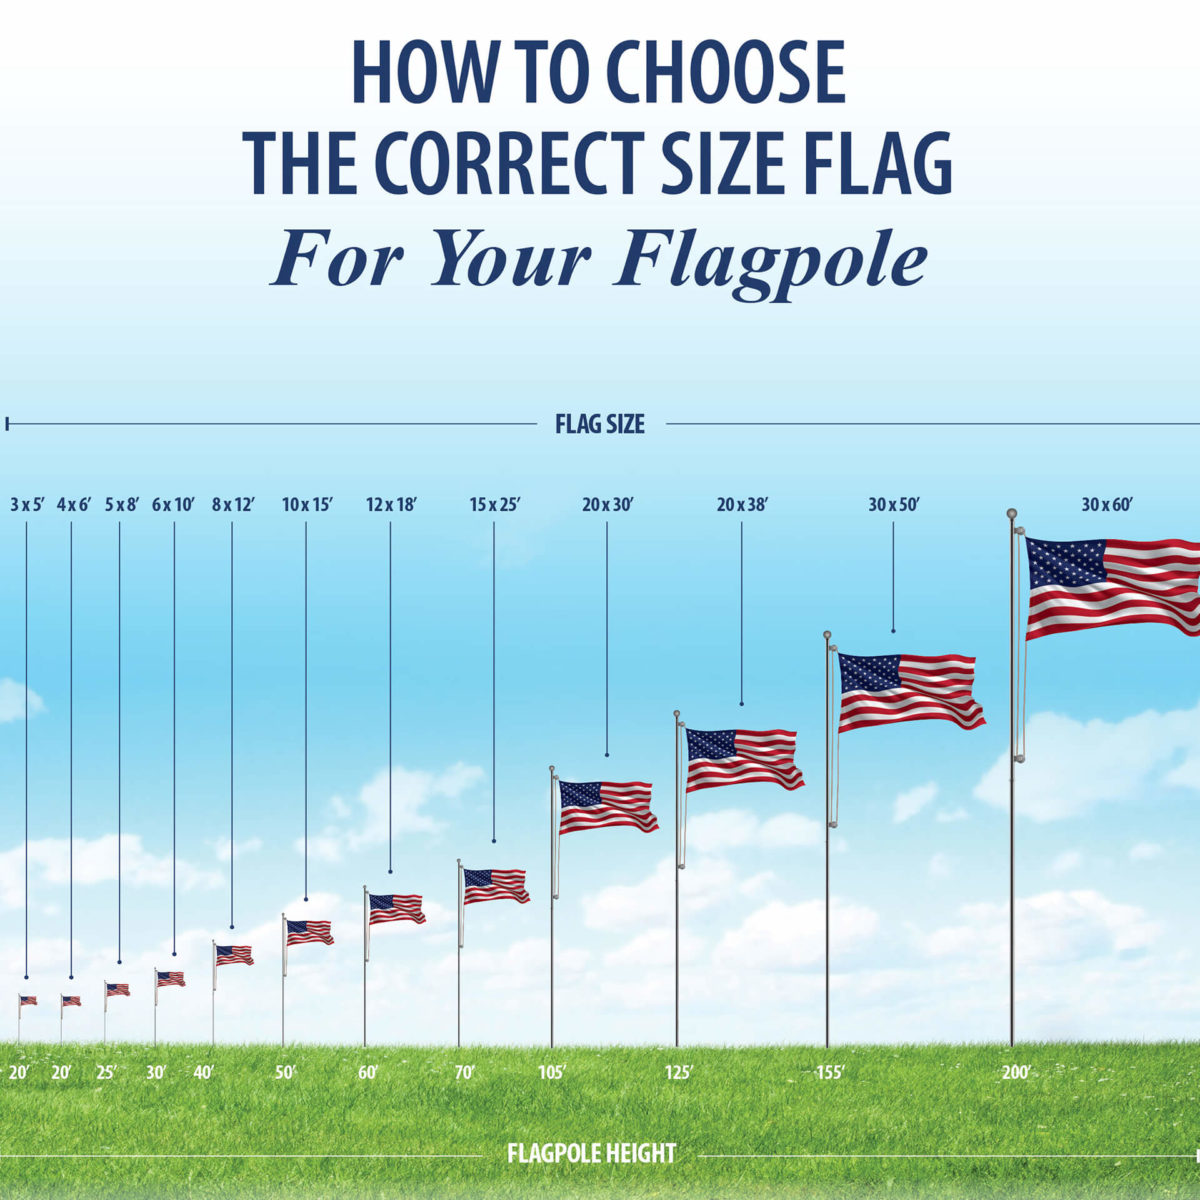 Choosing the Correct Size Flag Annin Flagmakers